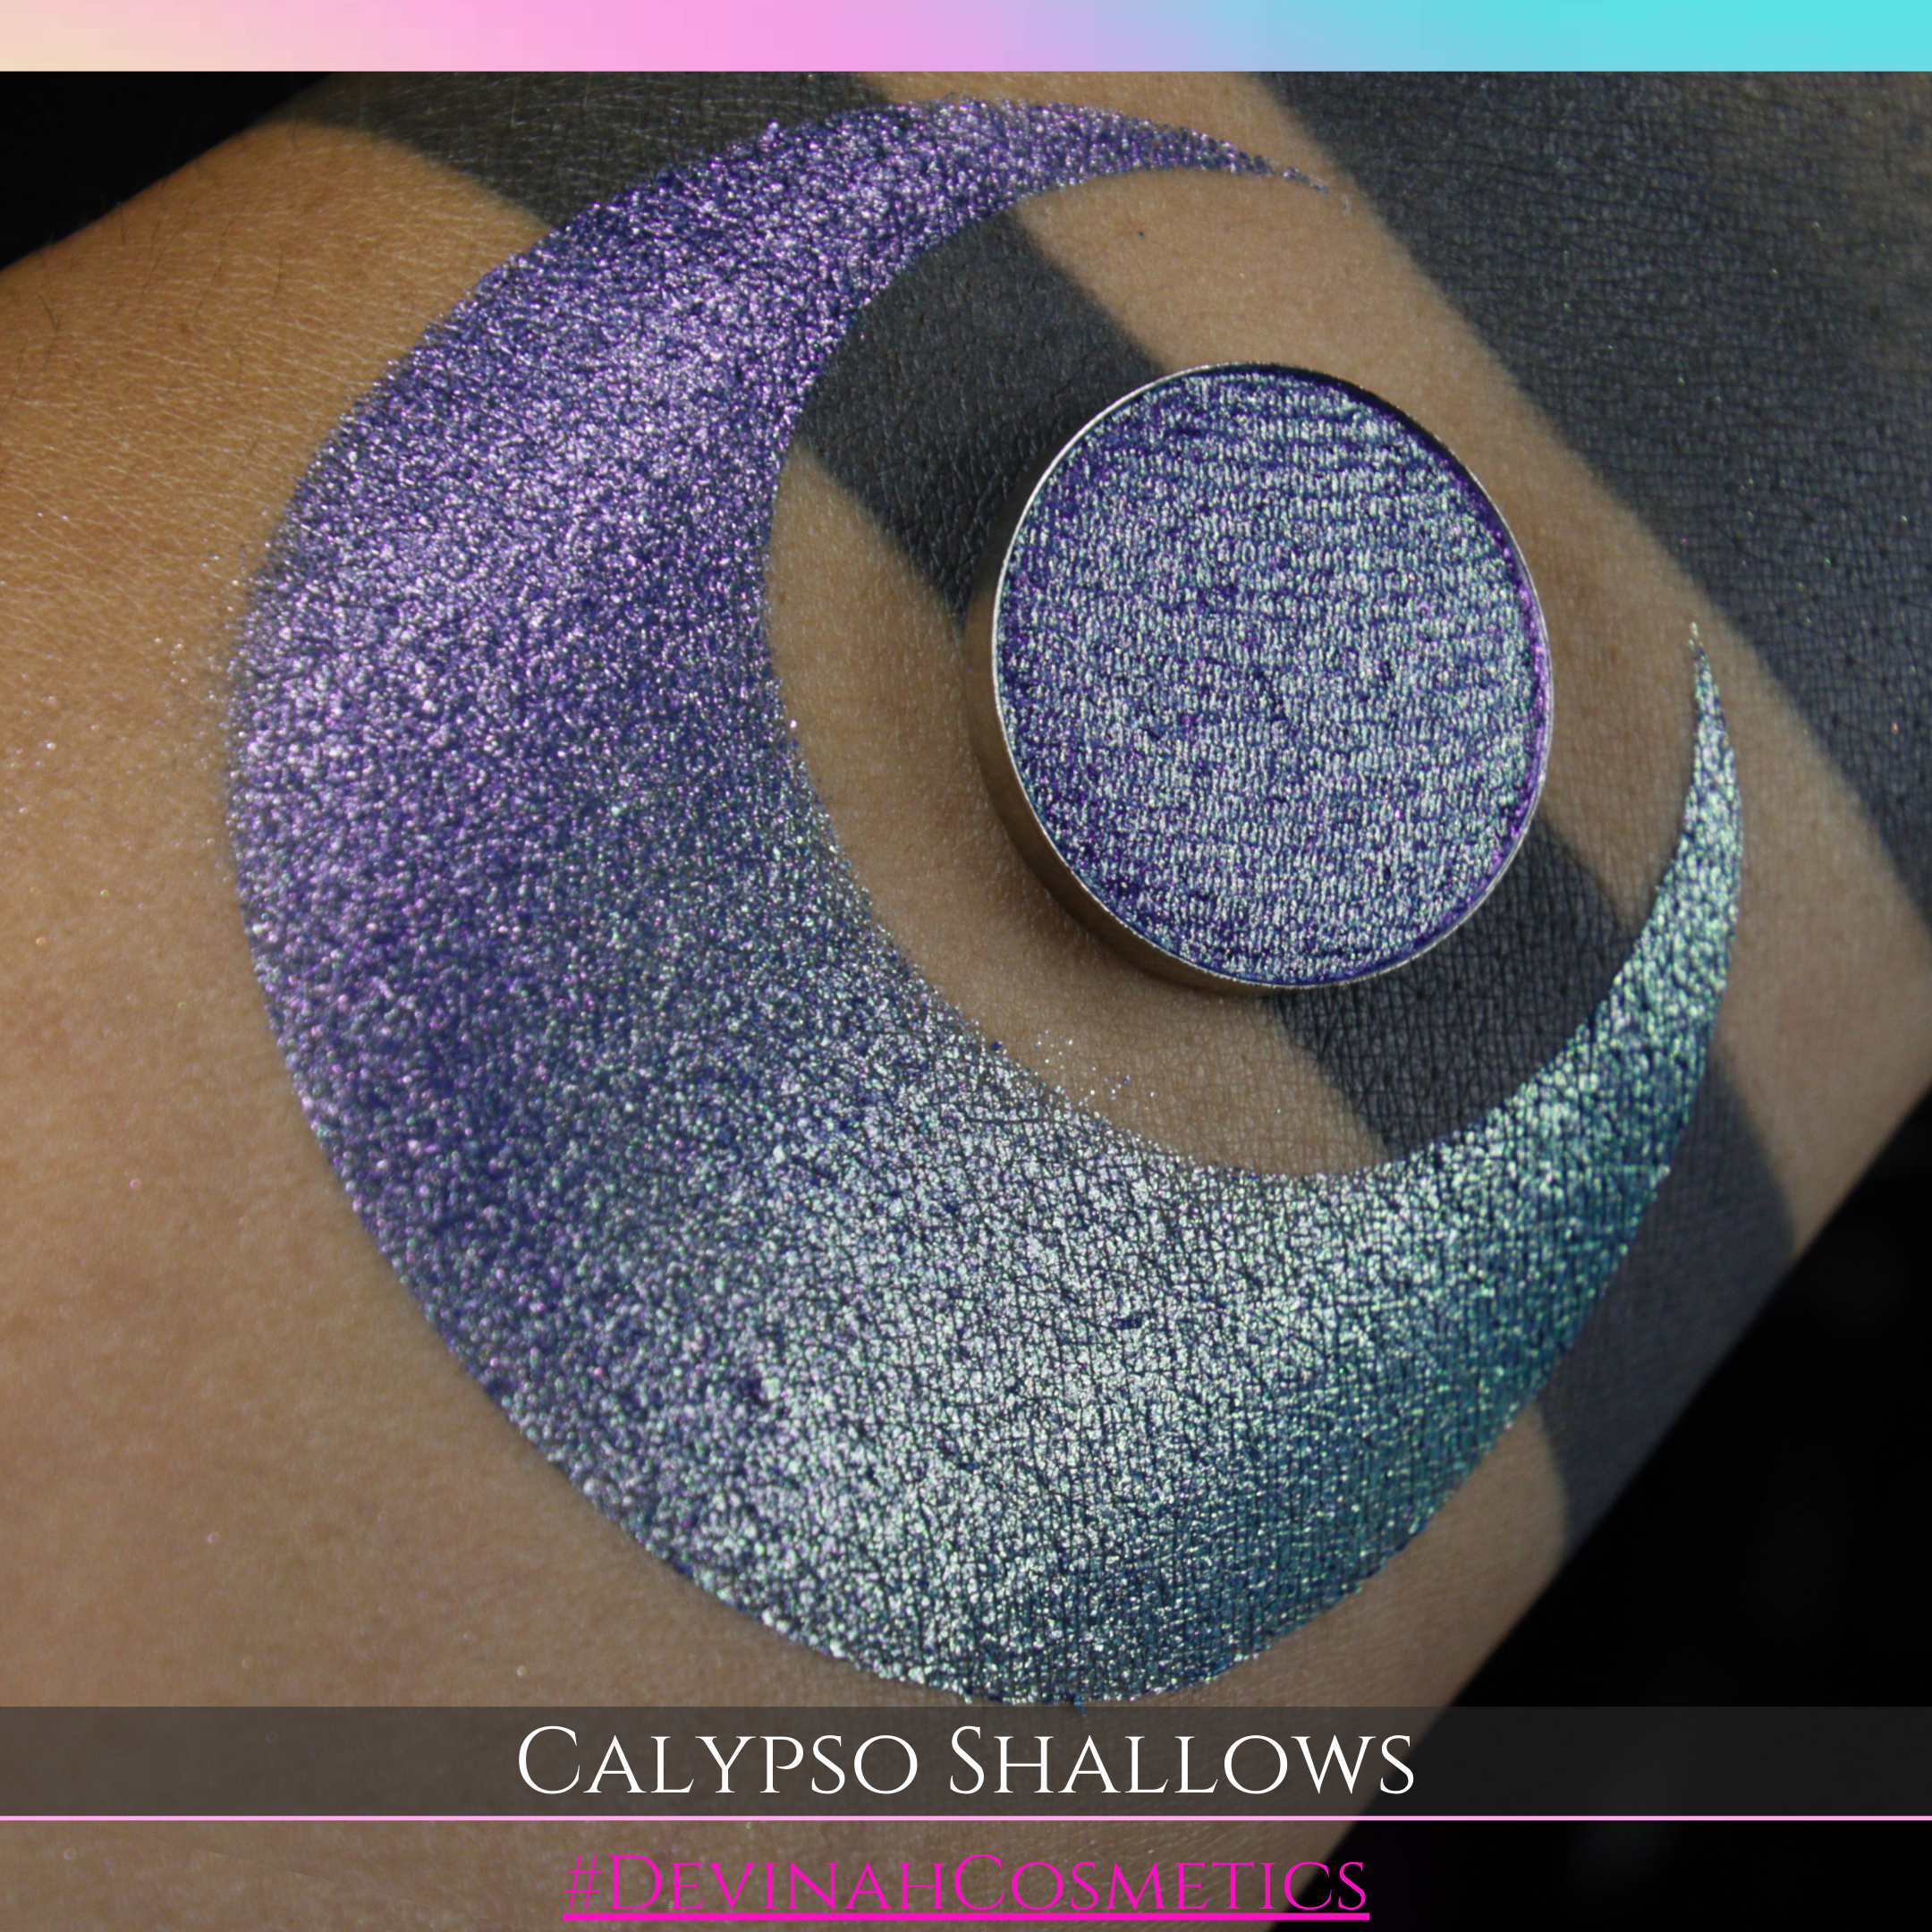 CALYPSO SHALLOWS Pressed Pigment